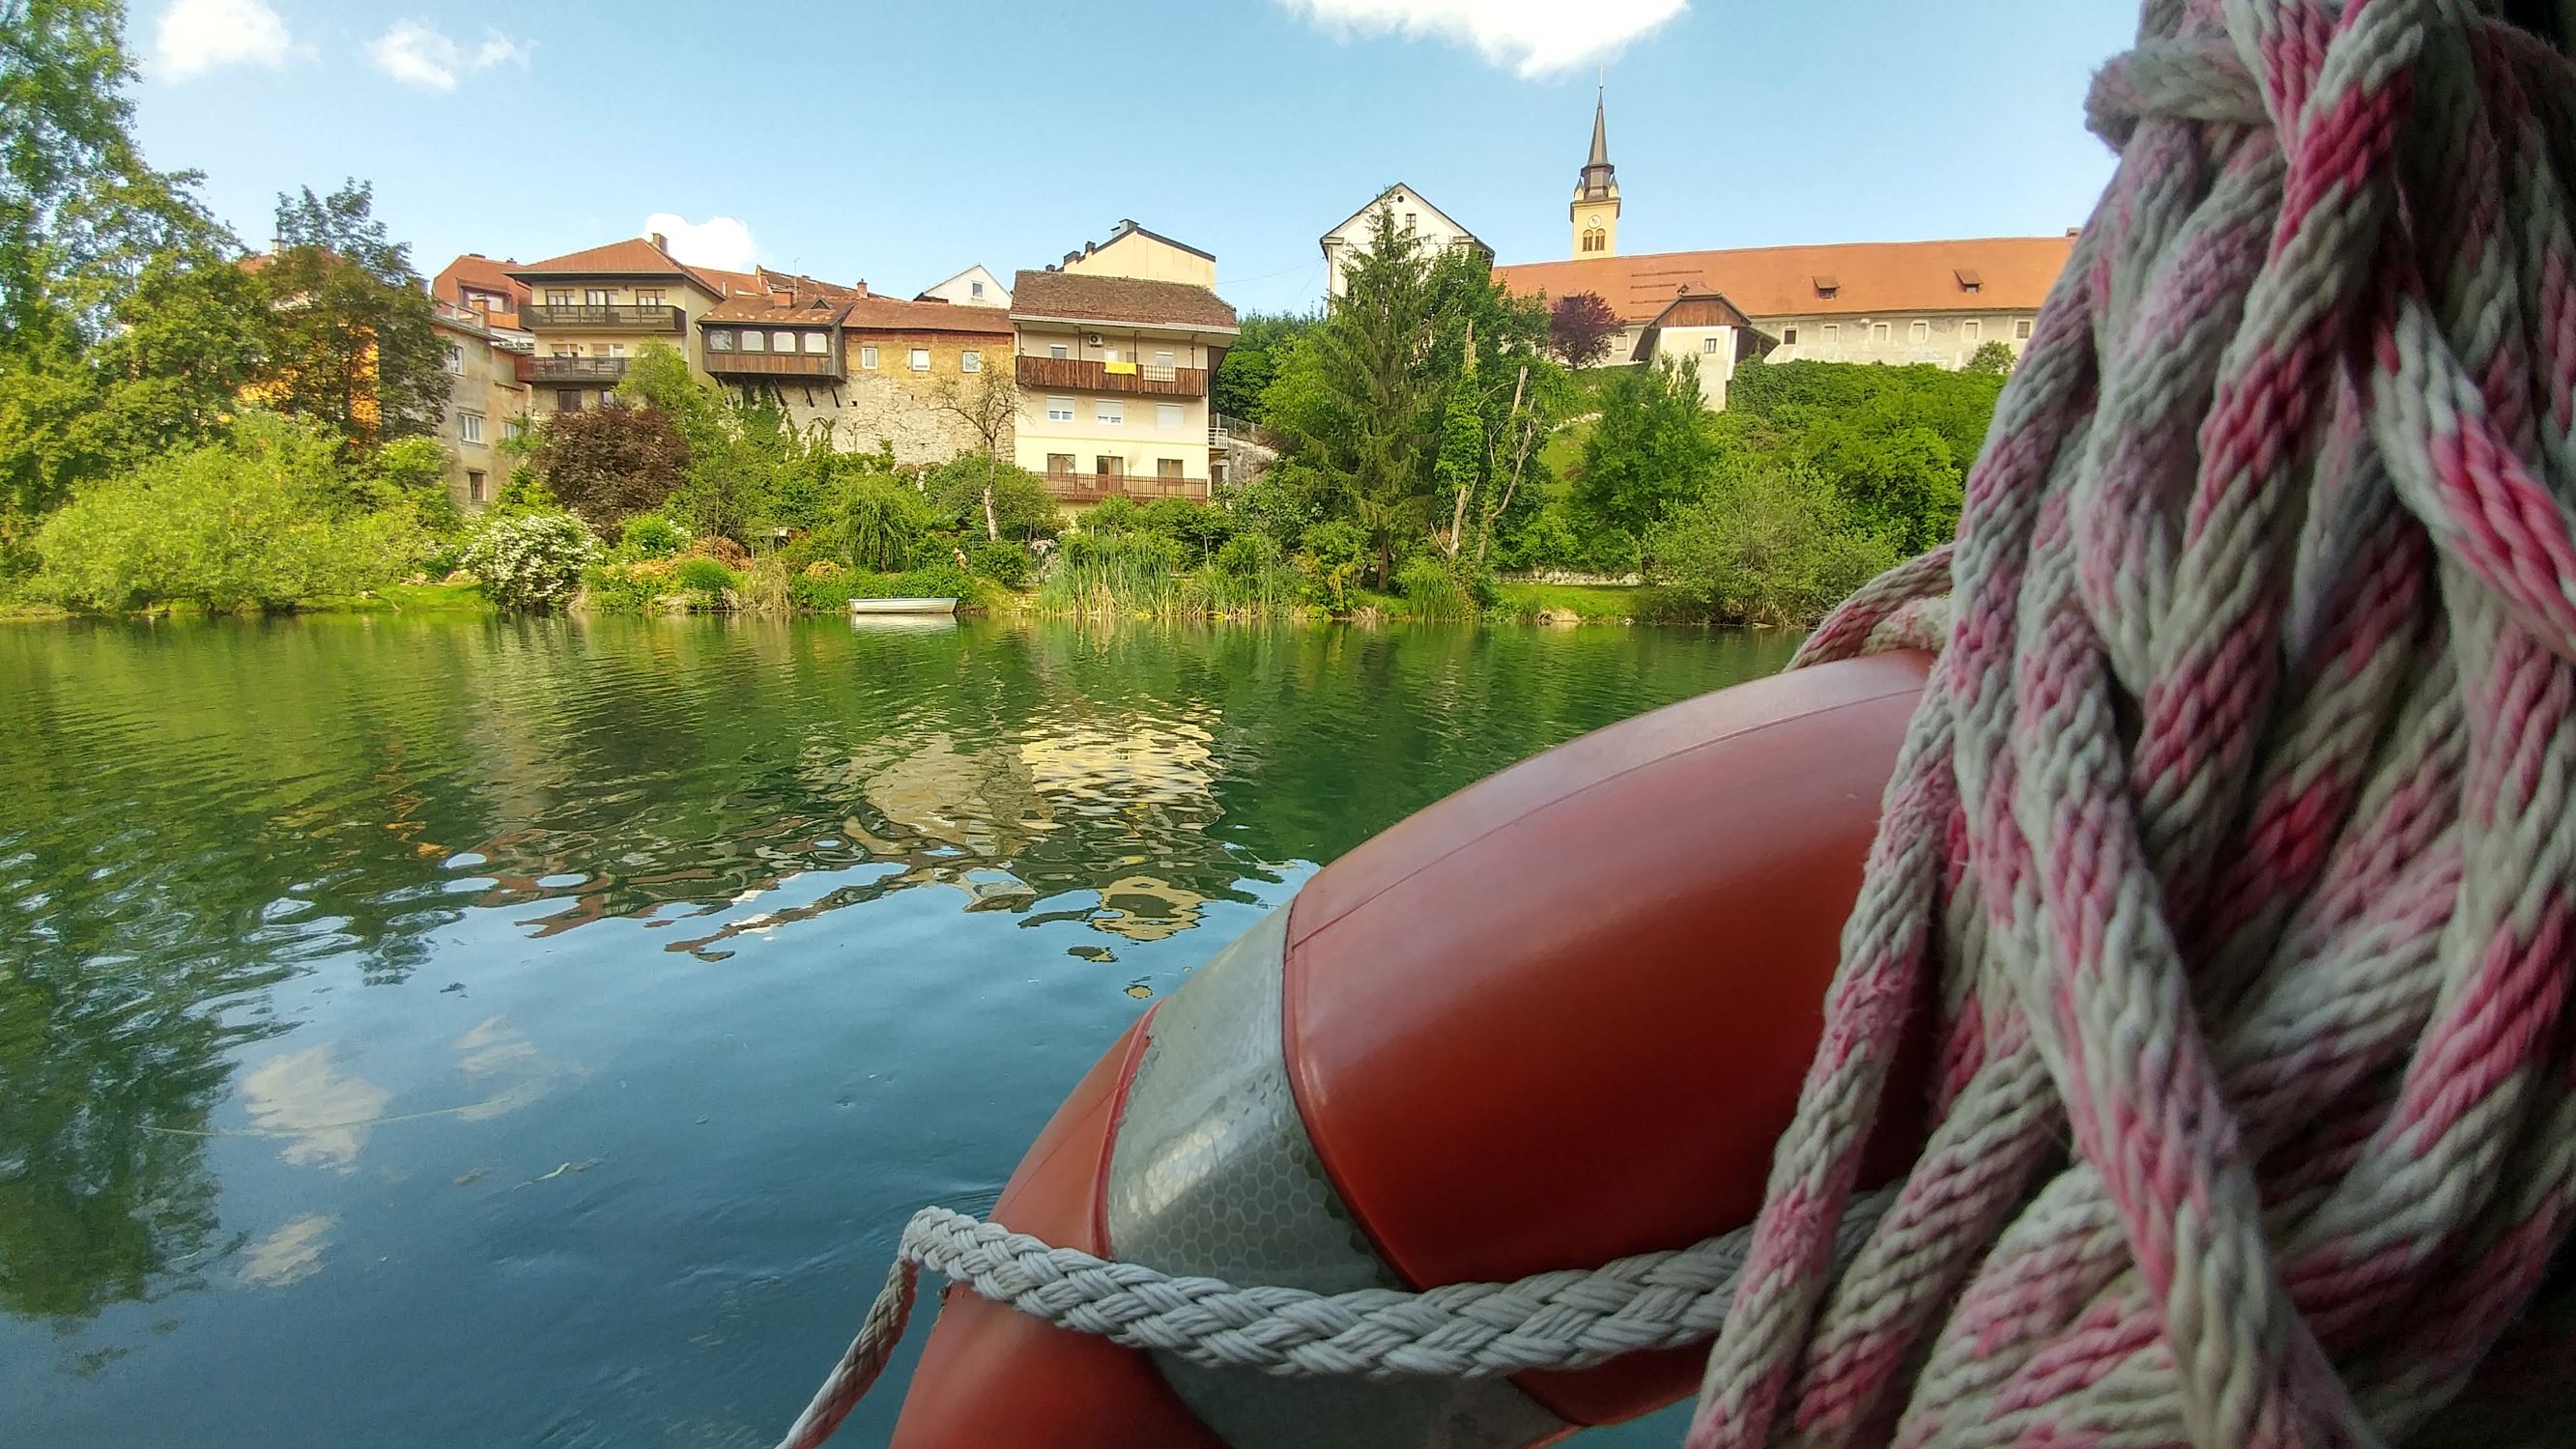 KNMtravel DMC, Historical trails, heritage trails, culture, roots, Dolenjska, Otocec castle, Rudolf's raft, Cvicek